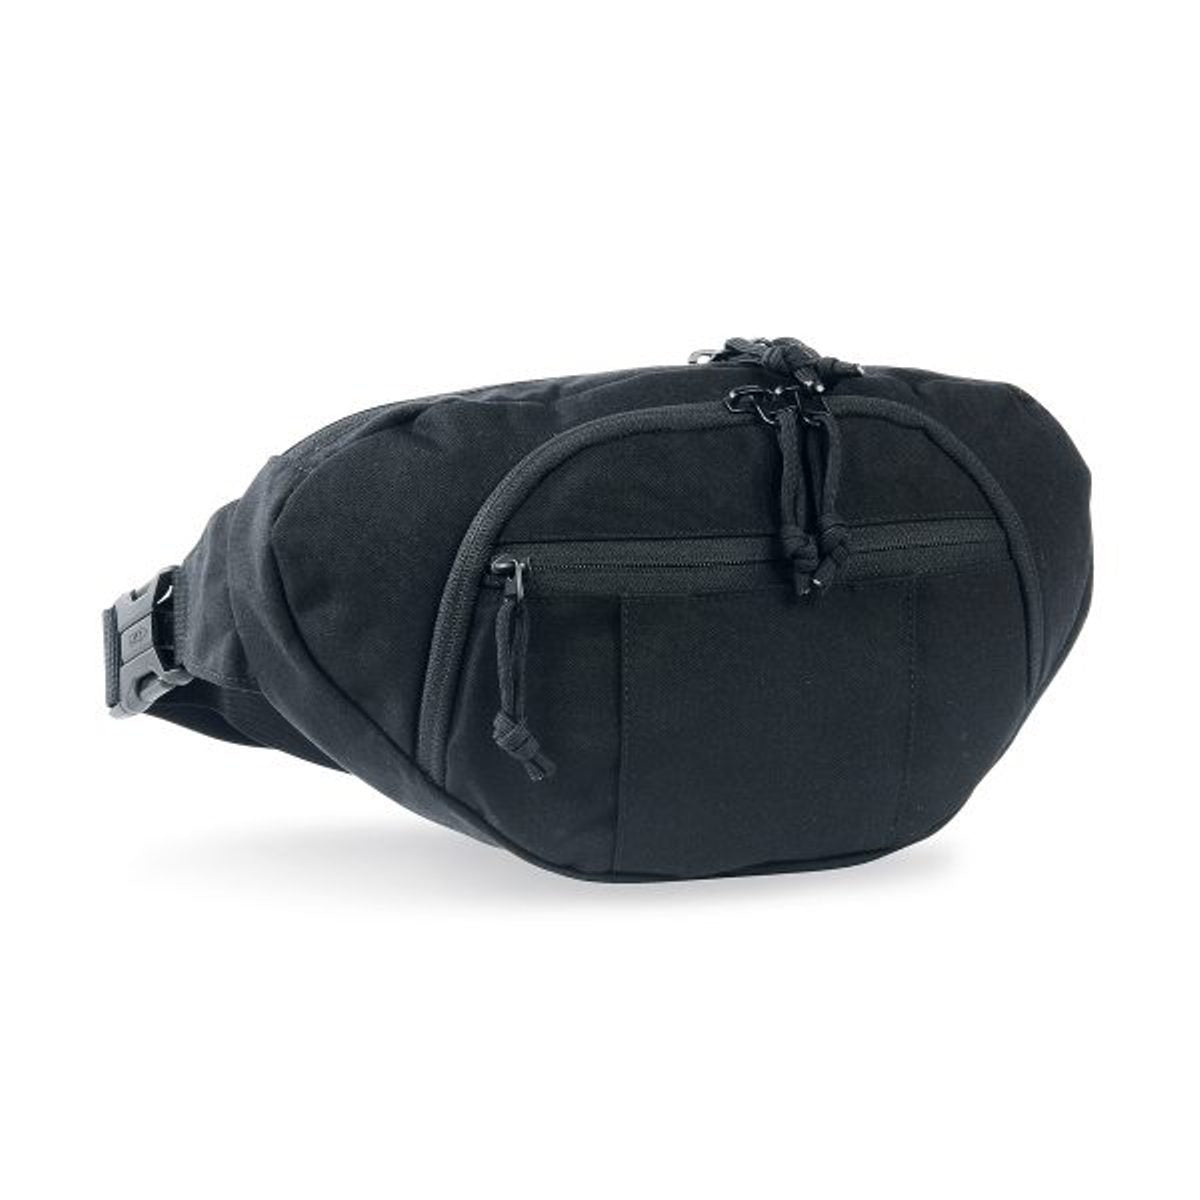 Tasmanian Tiger Hip Bag MKII Black Bags, Packs and Cases Tasmanian Tiger Tactical Gear Supplier Tactical Distributors Australia